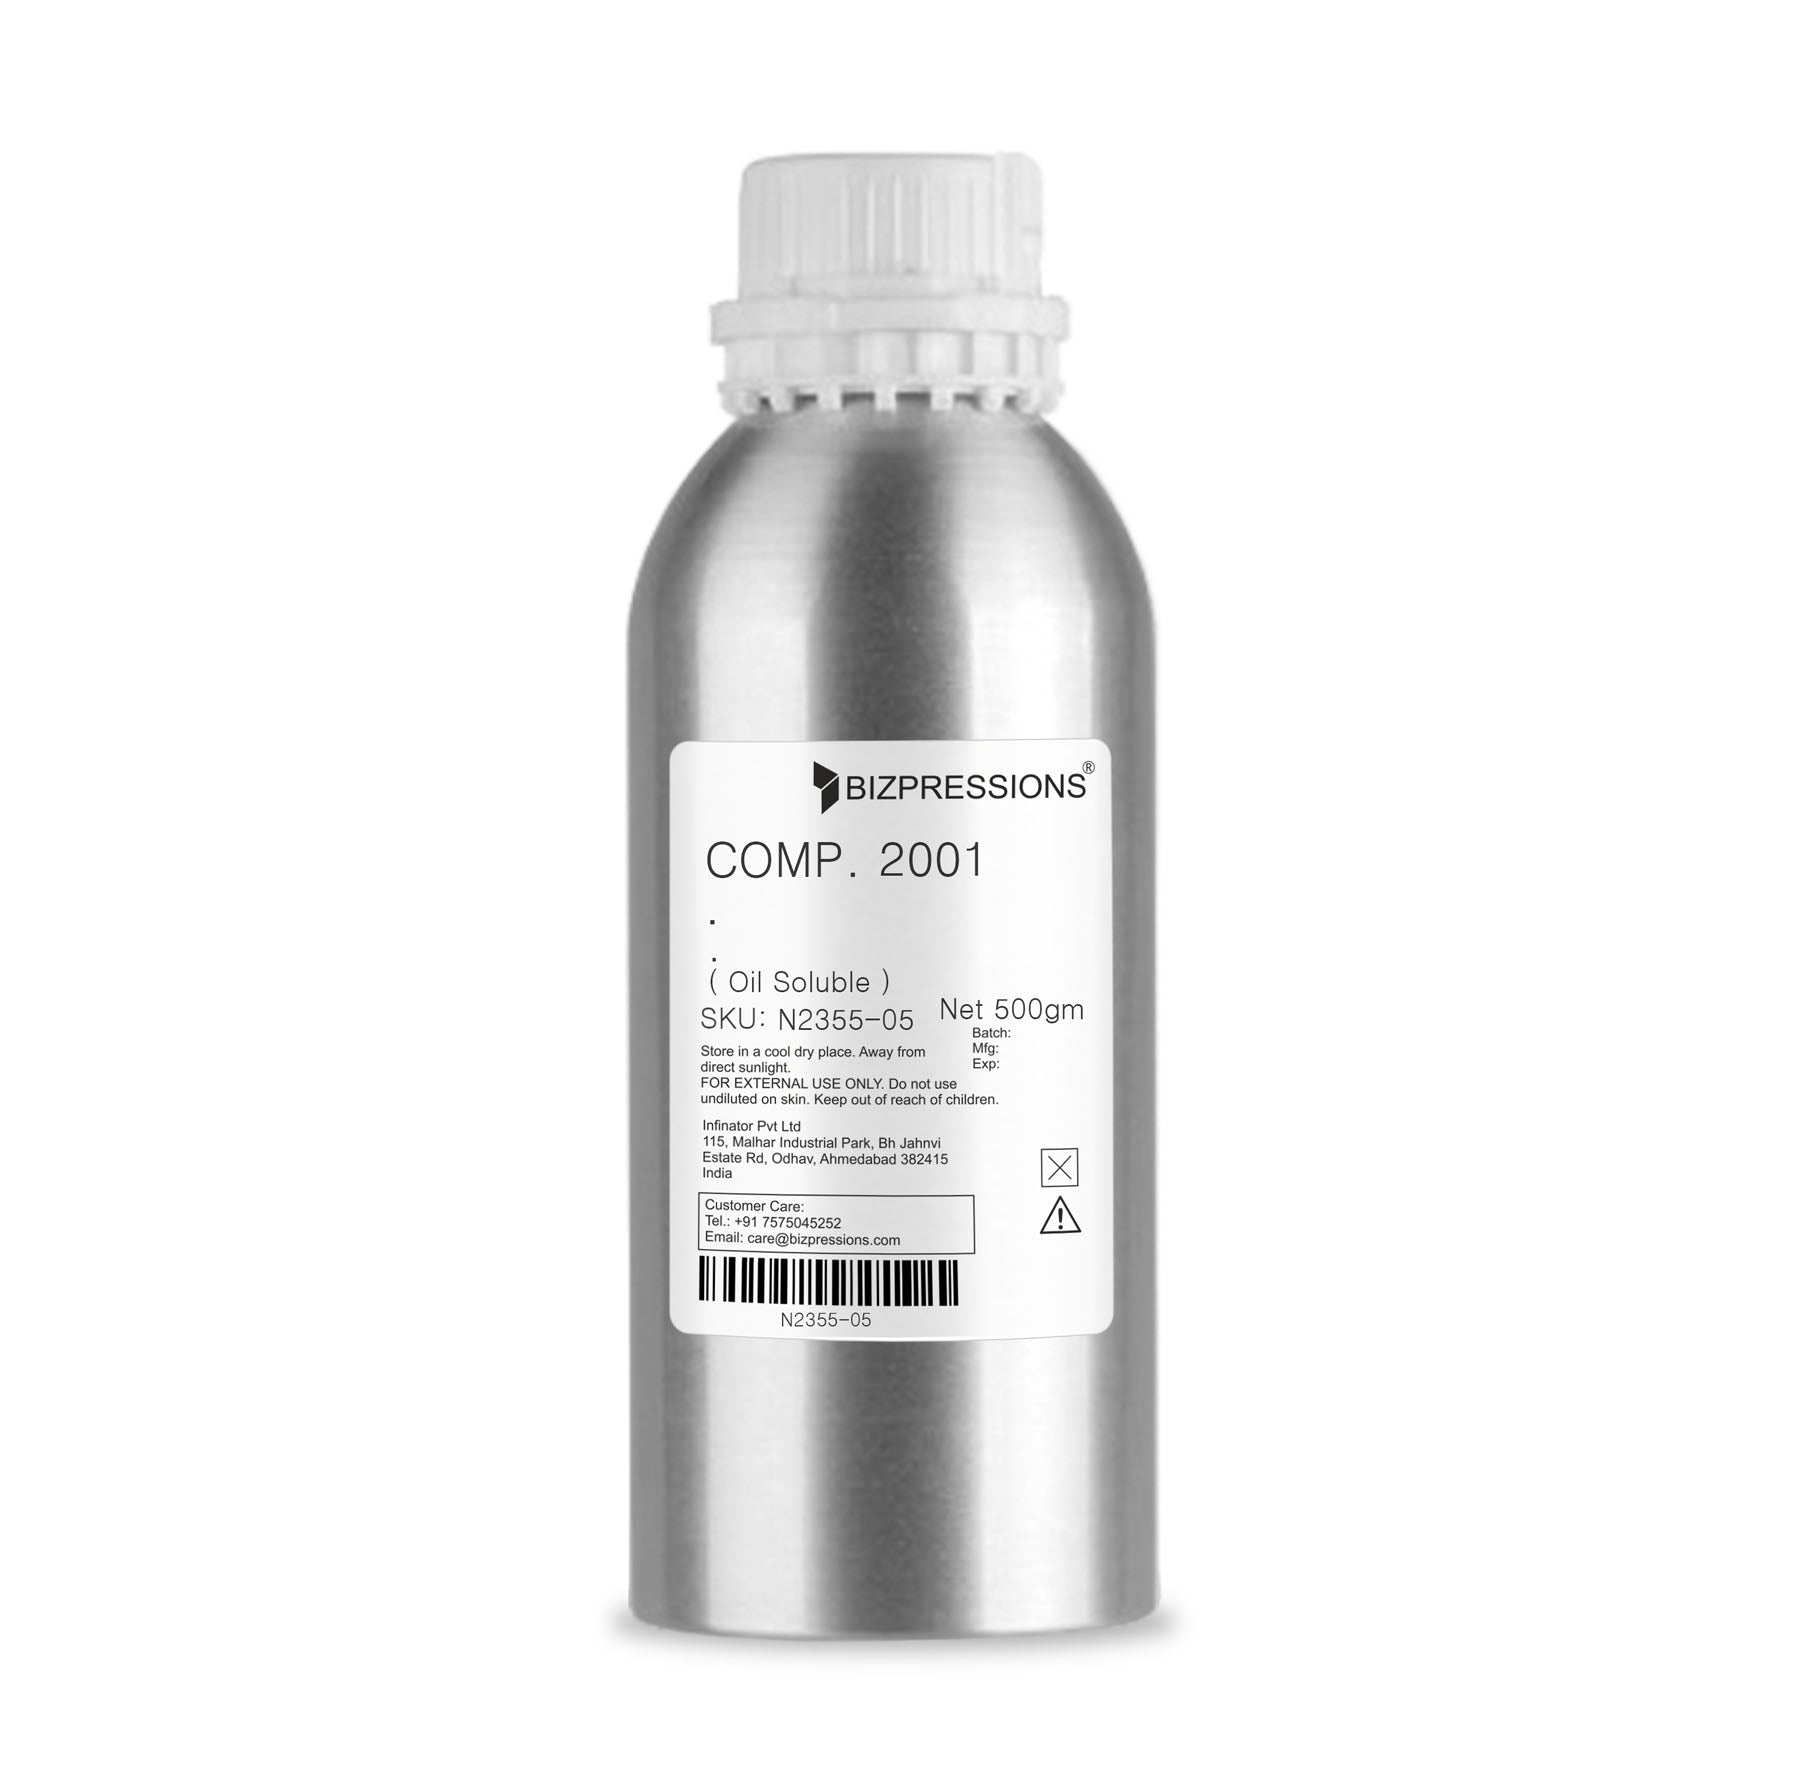 COMP. 2001 - Fragrance ( Oil Soluble ) - 500 gm